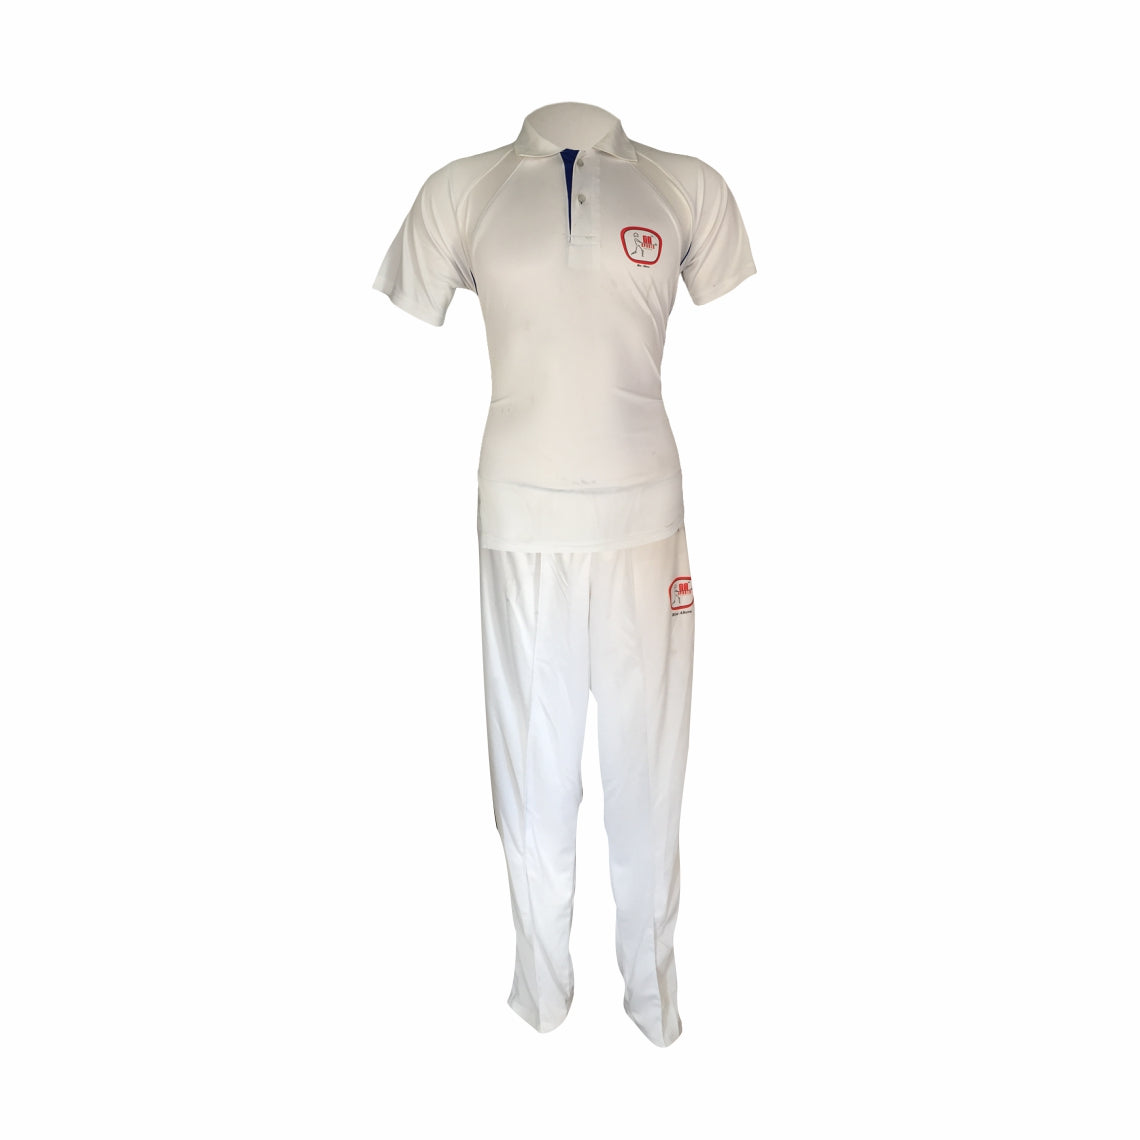 GA Club Cricket Kit Combo (Tshirt + Lower)